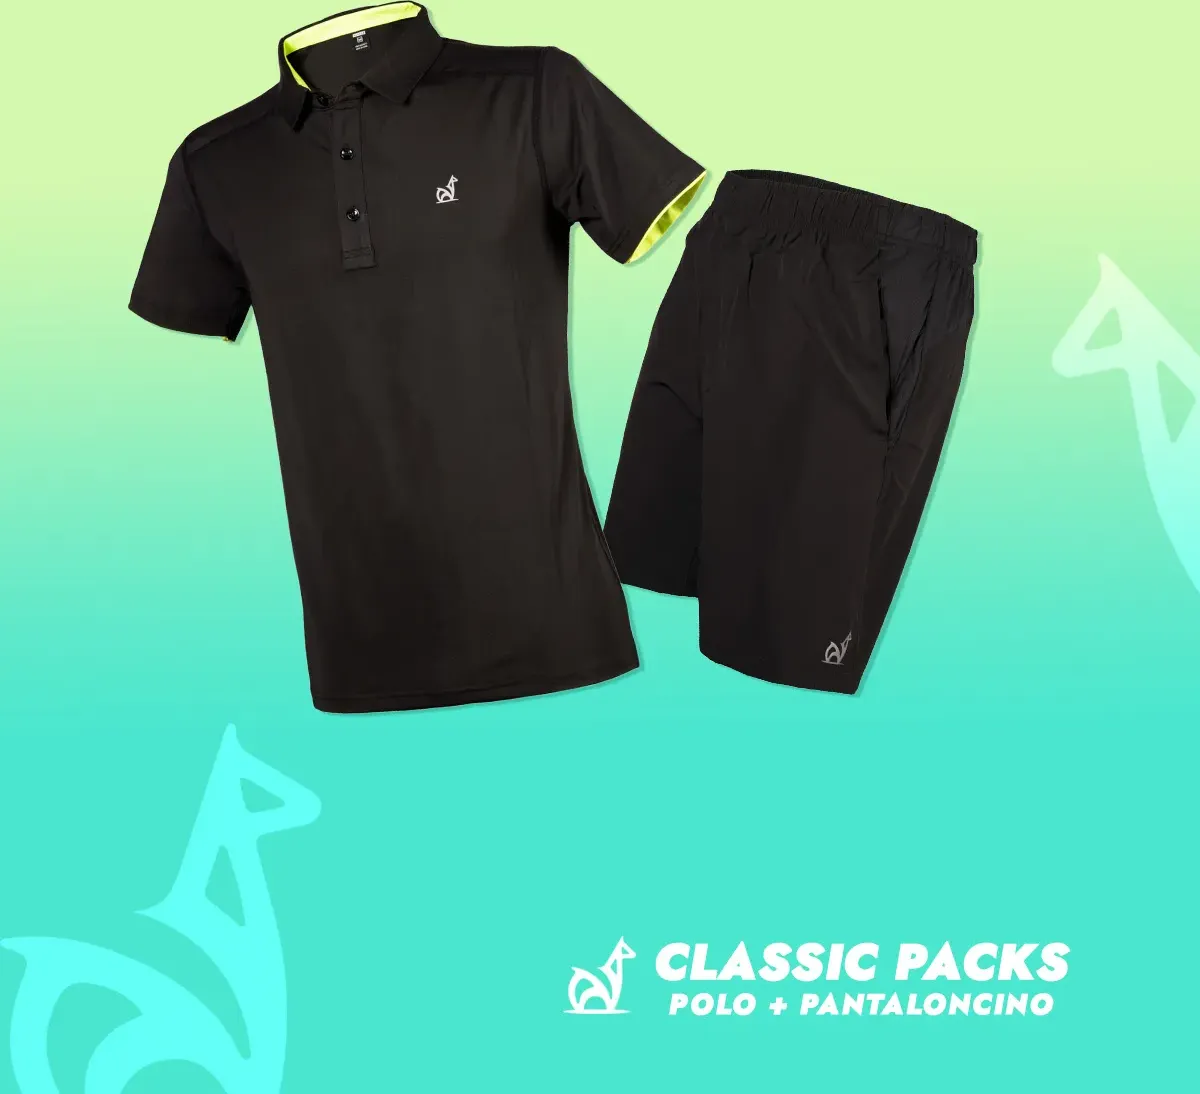 CLASSIC PACKS polo + pantaloncino black